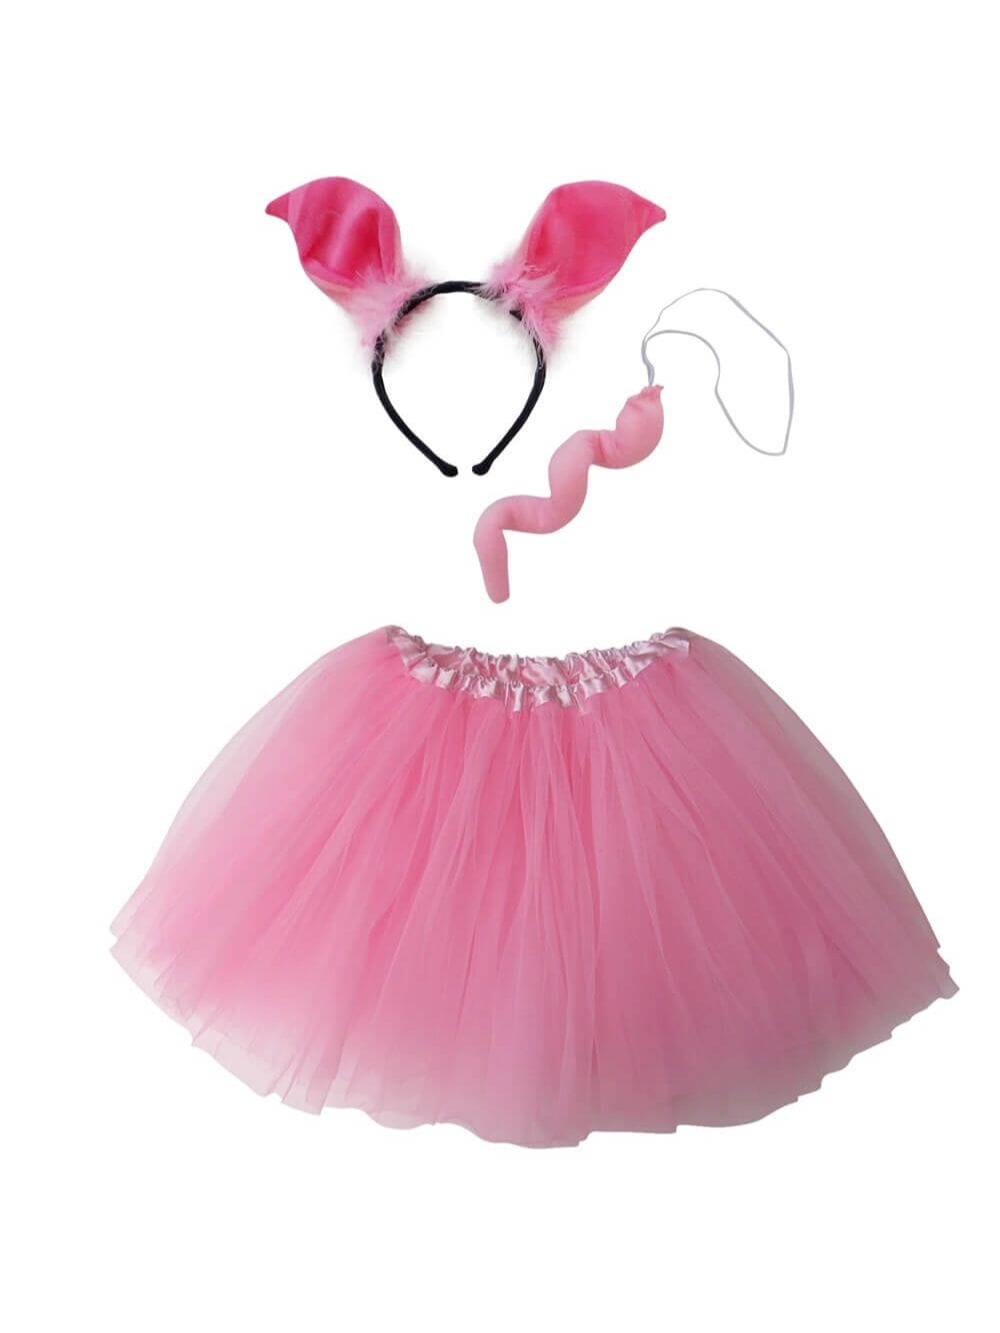 Adult Pig Costume - Pink Tutu Skirt, Tail, & Headband Set for Adult or Plus Size - Sydney So Sweet